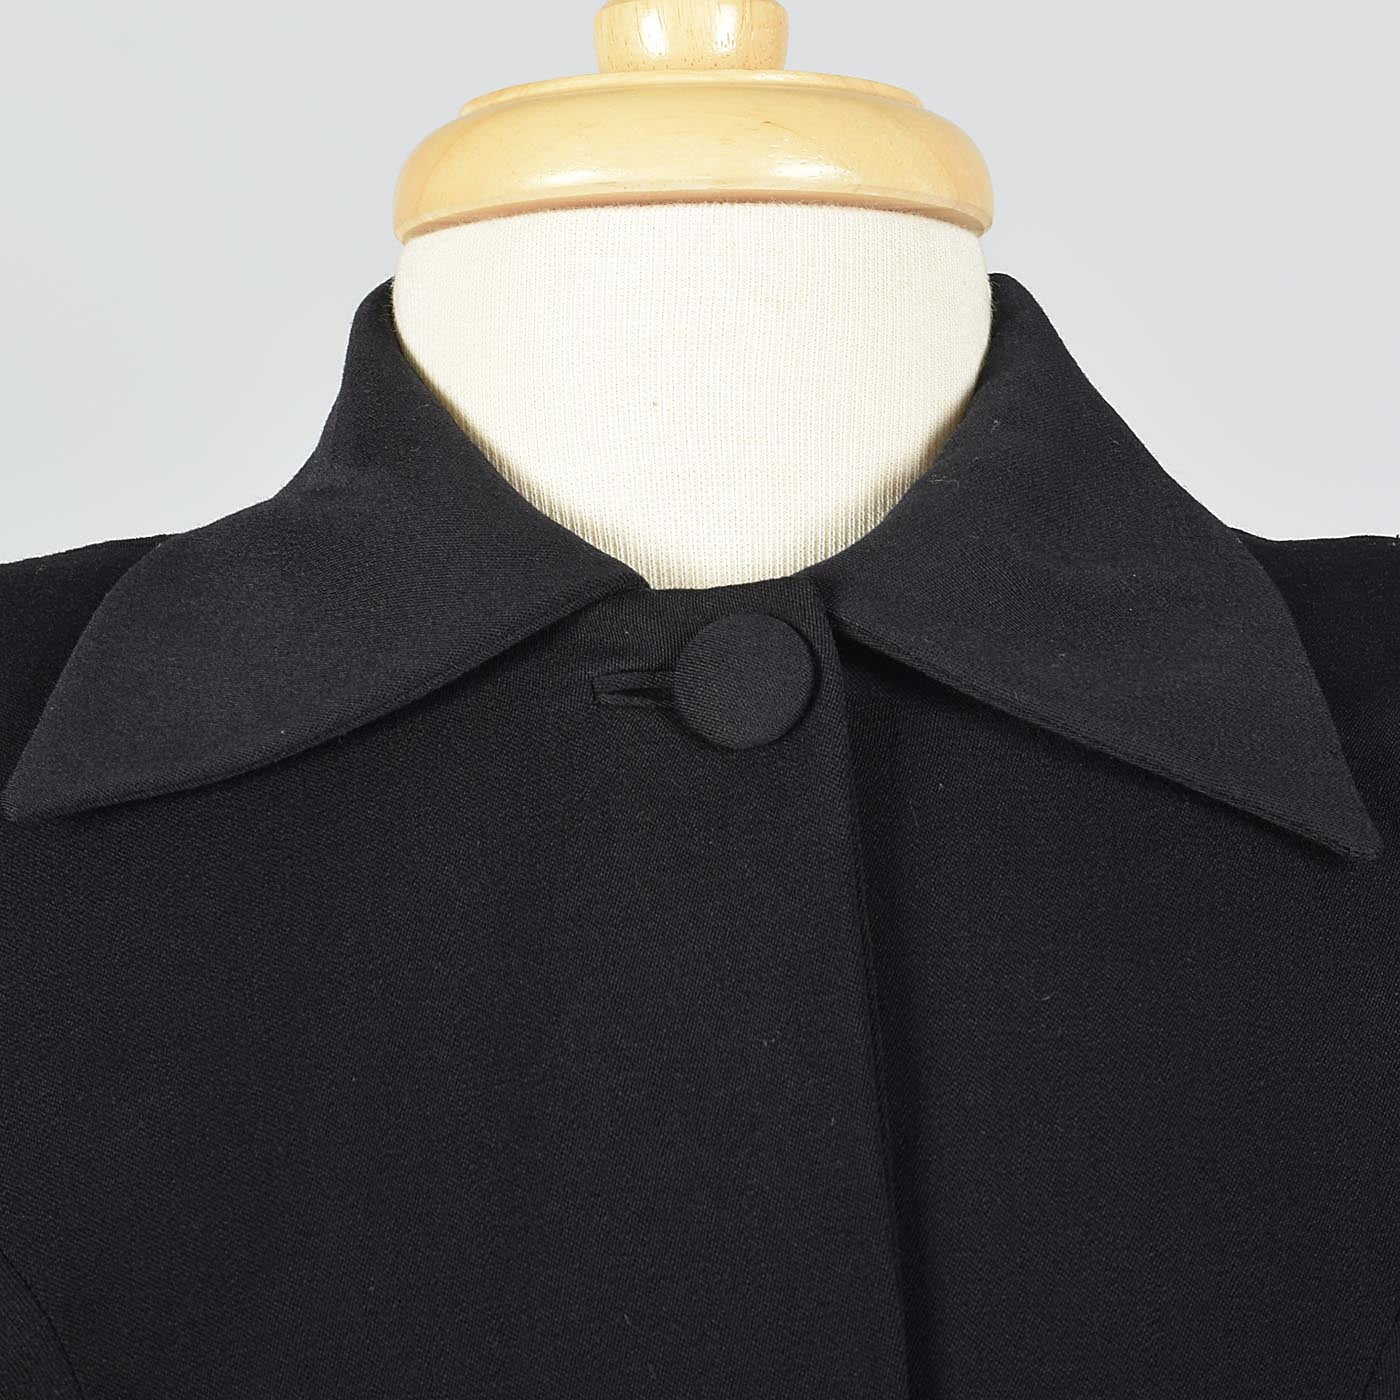 1950s Lilli Ann Classic Black Hourglass Jacket